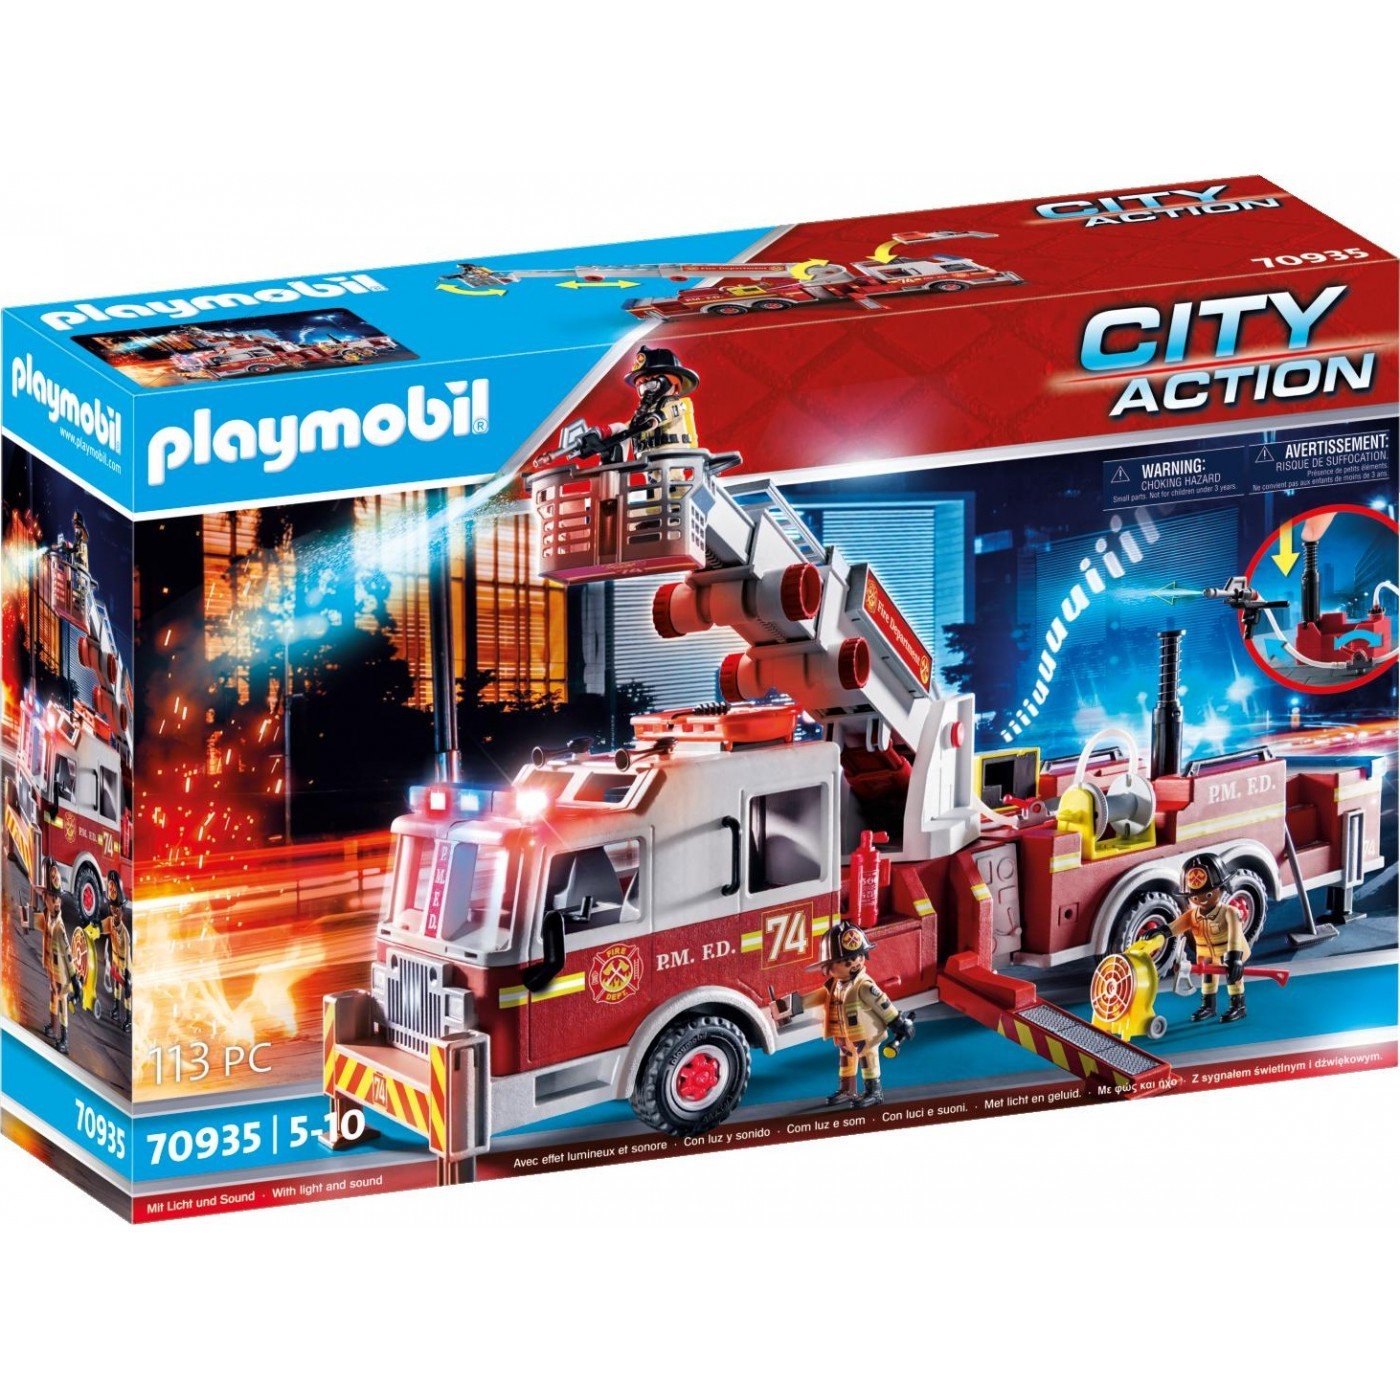 Playmobil City Action US Tower Ladder: Πυροσβεστικό όχημα 70935 - Playmobil, Playmobil City Action